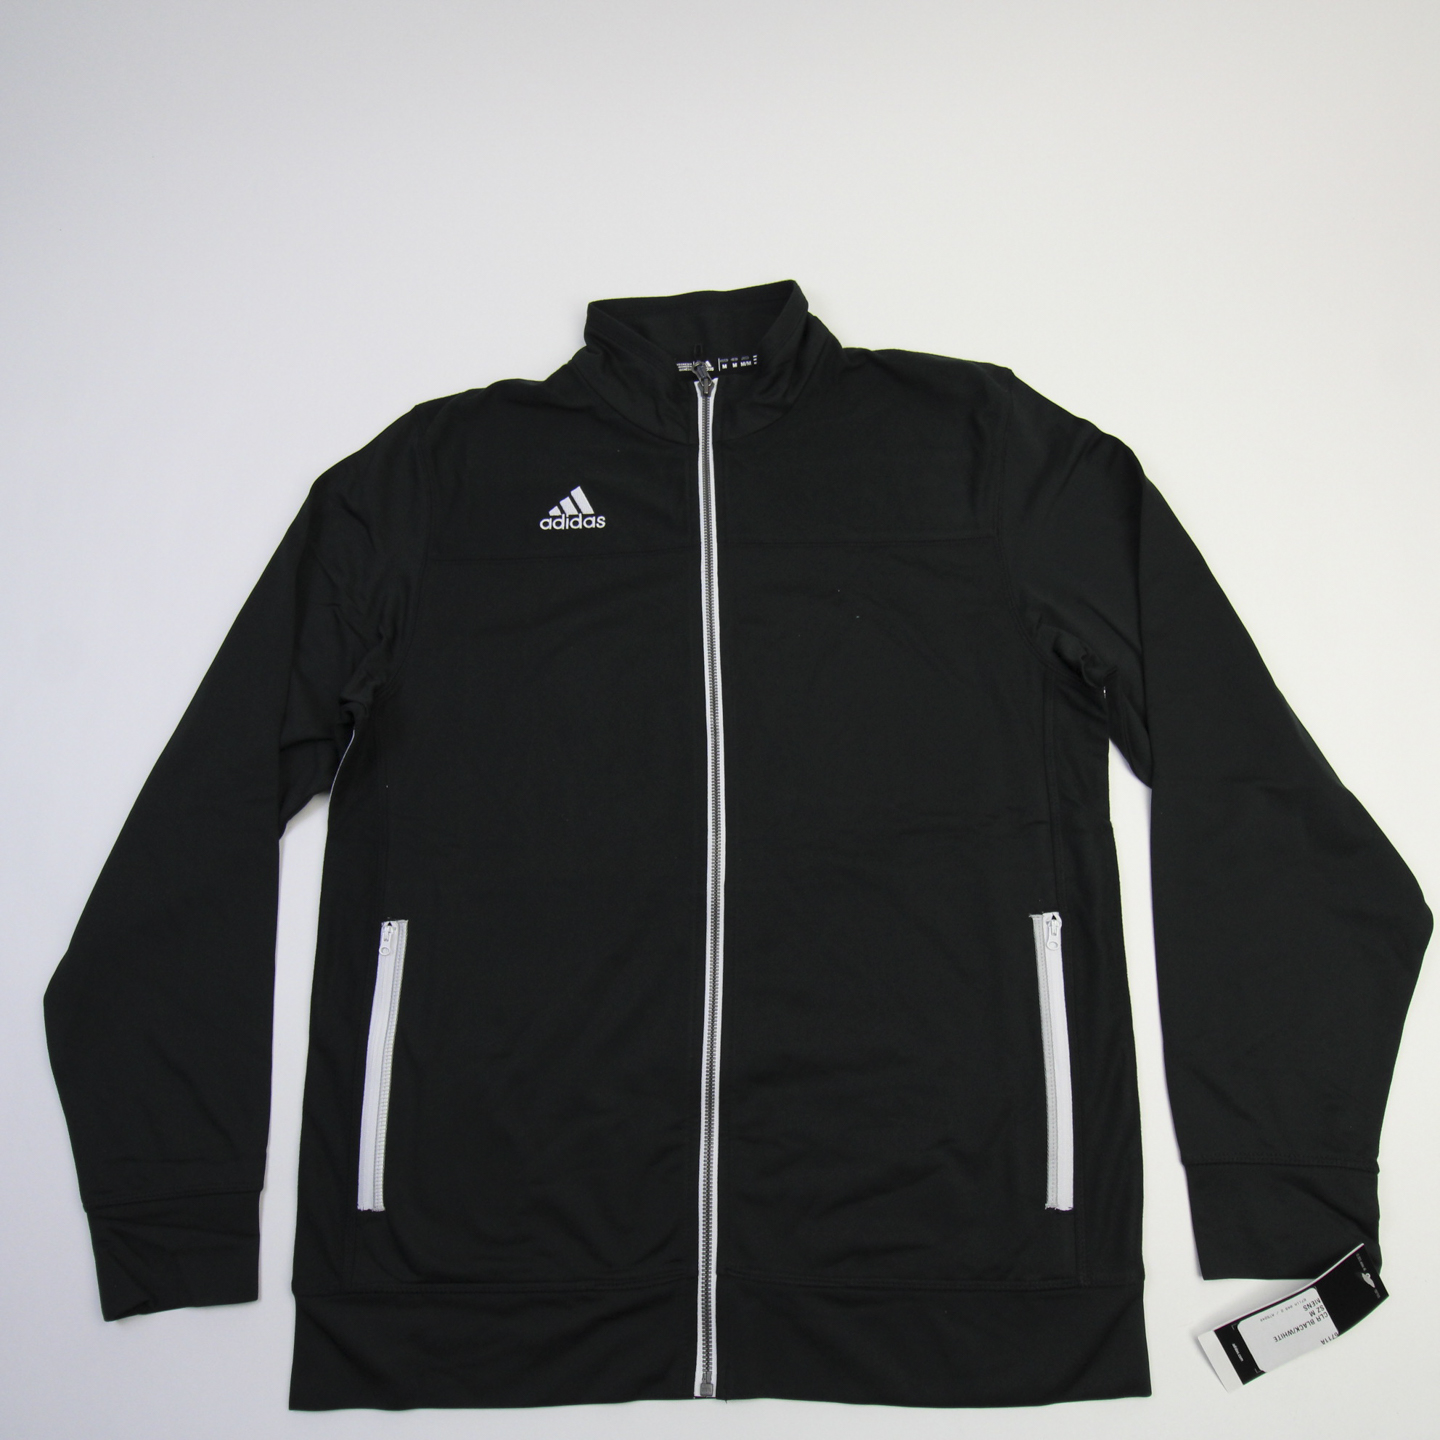 adidas Climacool Jacket Men's Black White M Medium Pockets Sport New with  Tags | eBay